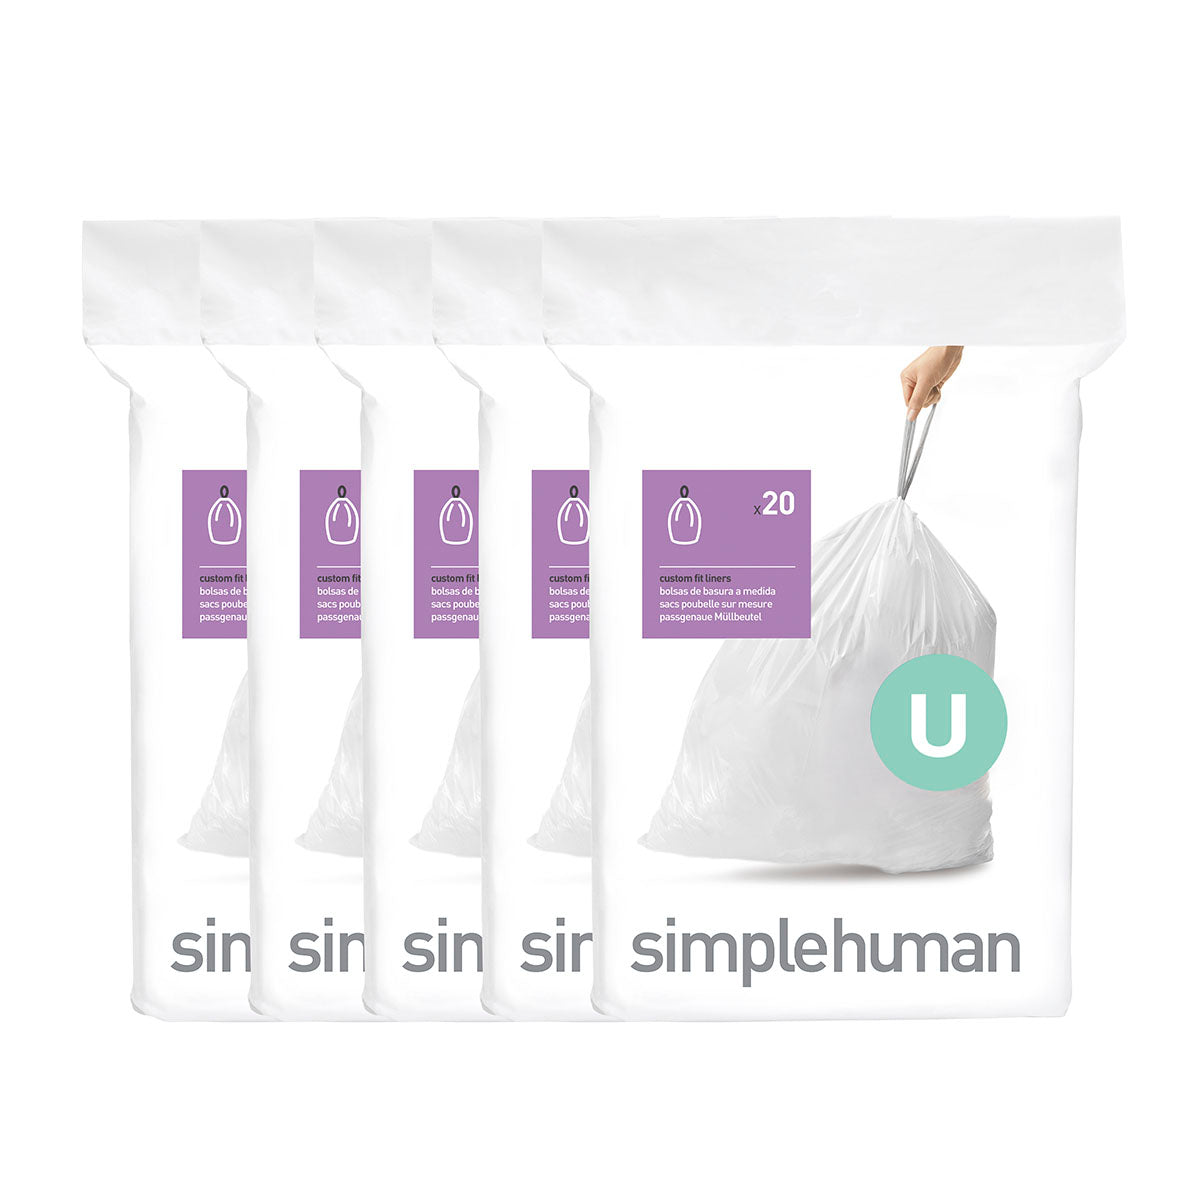 100pk Replacement Durable Garbage Bags, Fits Simplehuman¨ Ôsize ''B''Ô, 6L  / 1.6 Gallon